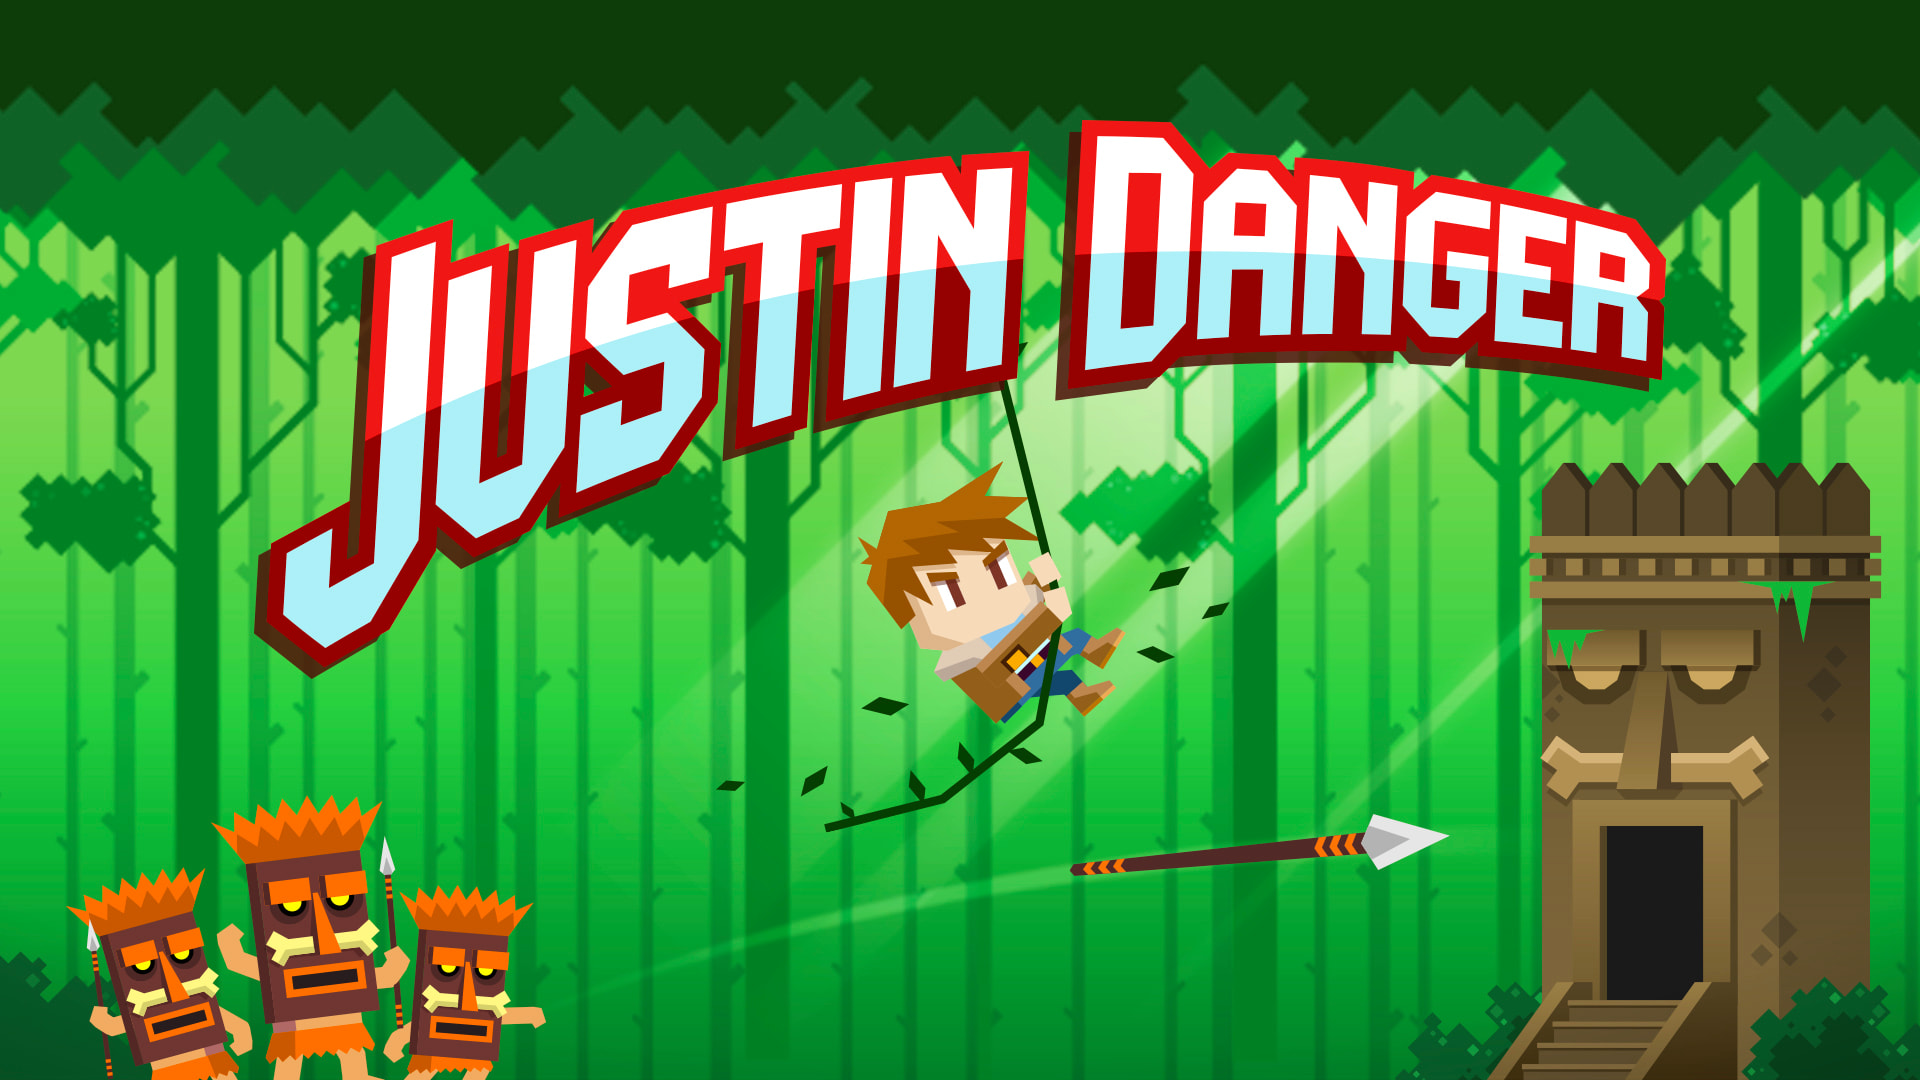 Justin Danger 1